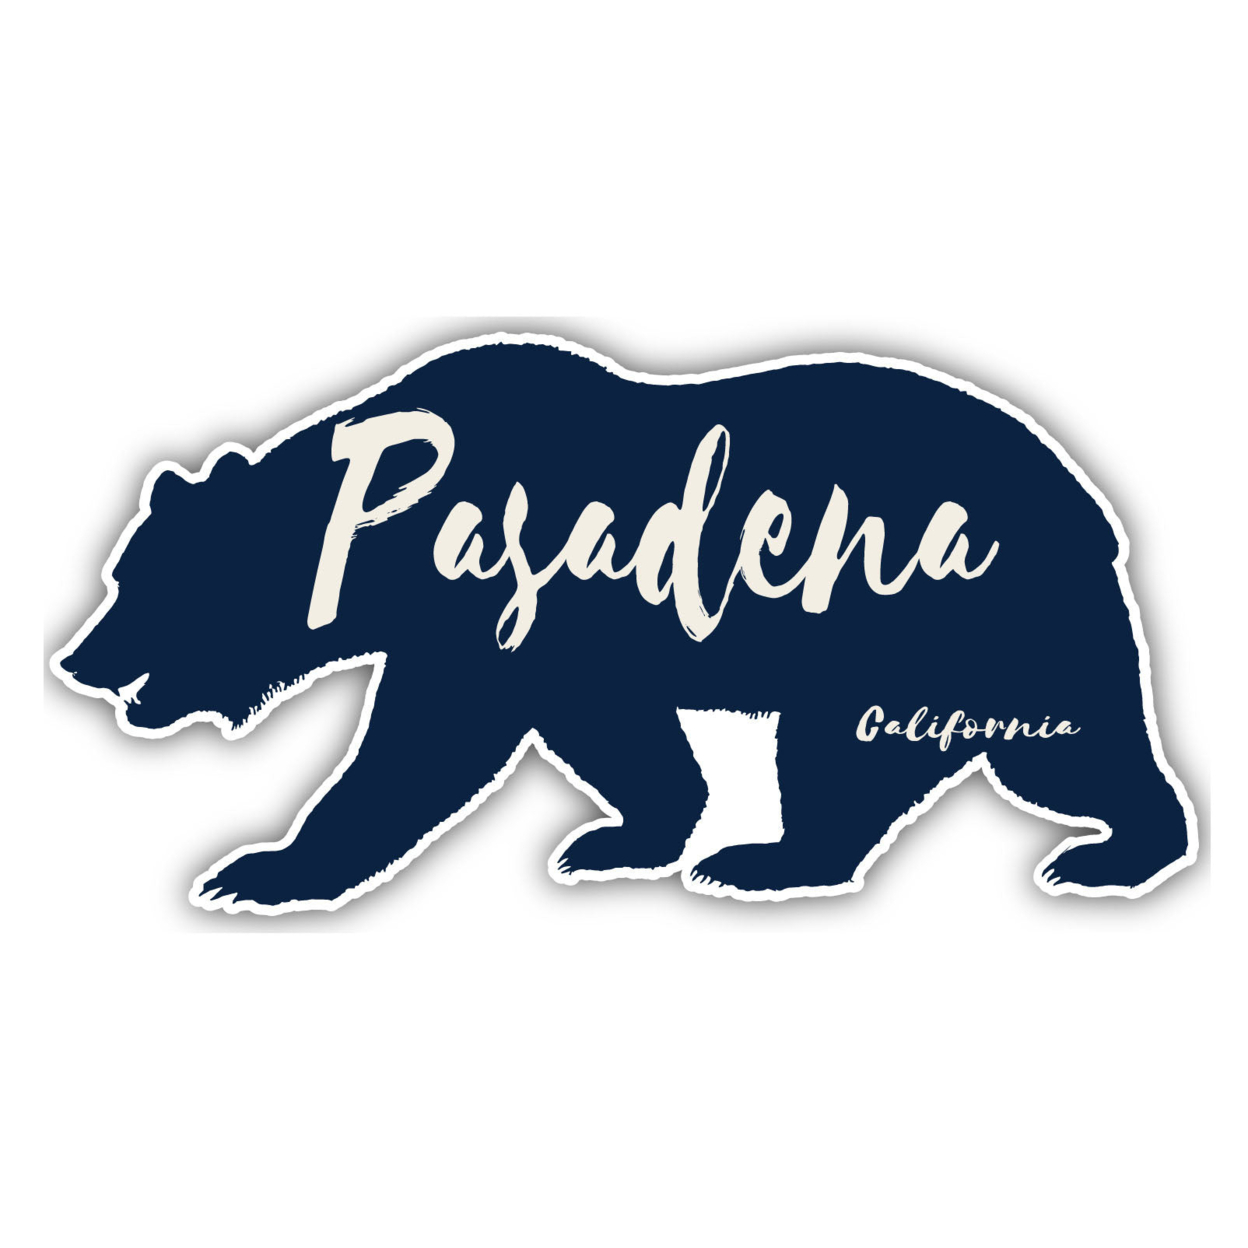 Pasadena California Souvenir Decorative Stickers (Choose Theme And Size) - Single Unit, 2-Inch, Bear